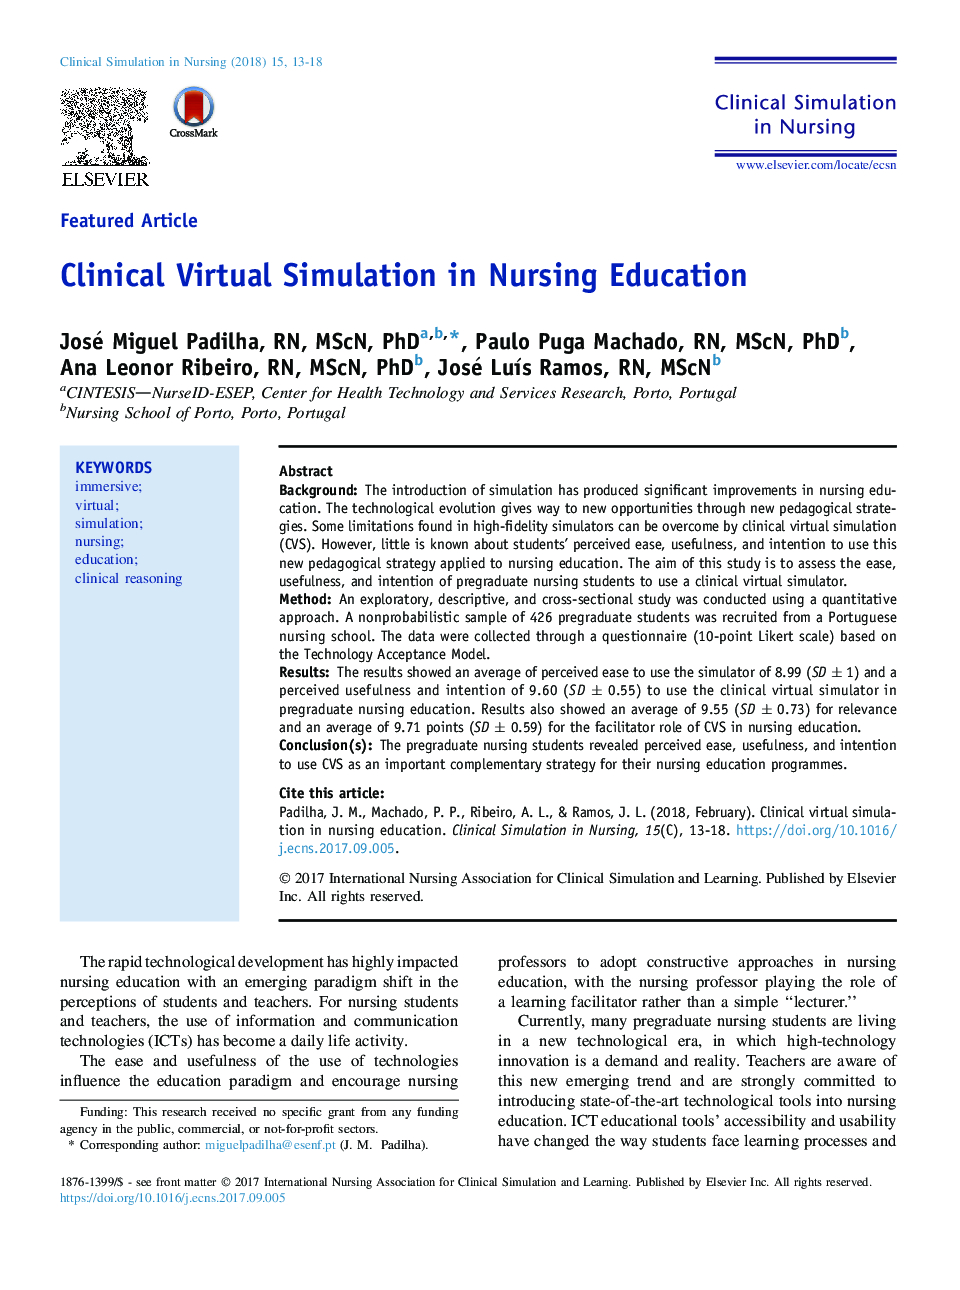 Clinical Virtual Simulation in Nursing Education